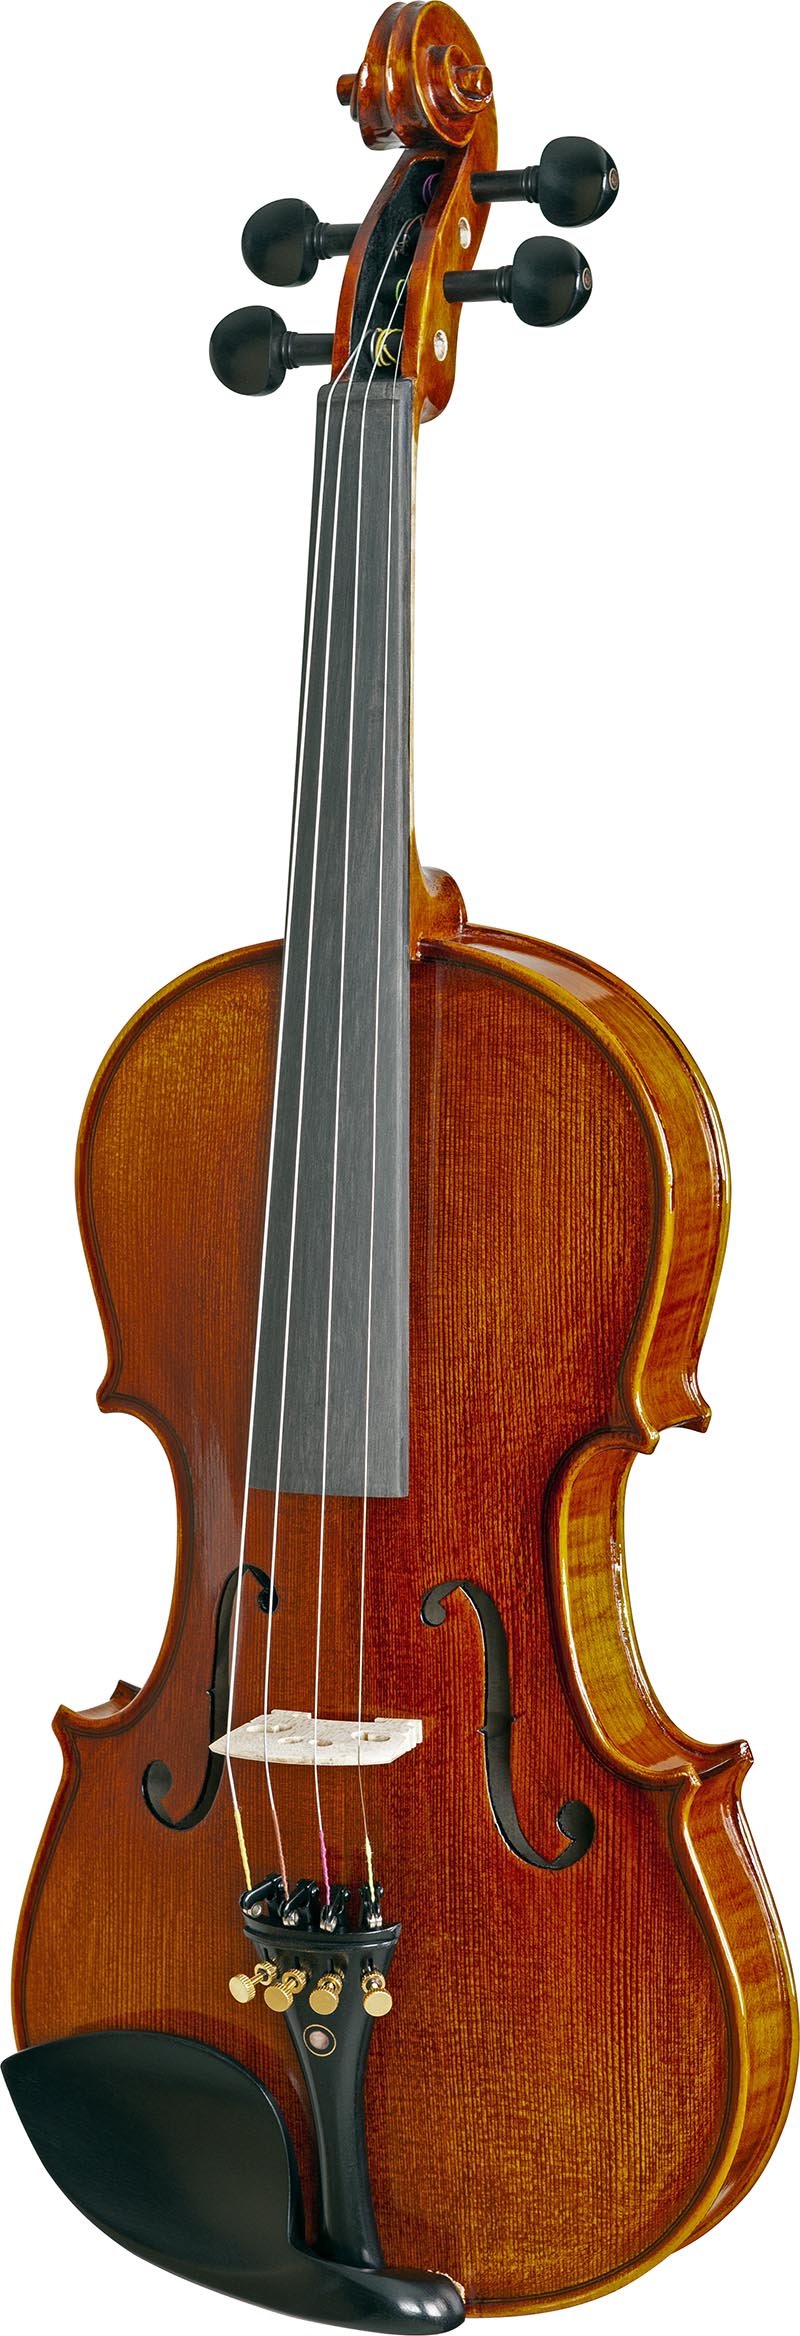 vk644 violino eagle vk644 visao frontal vertical